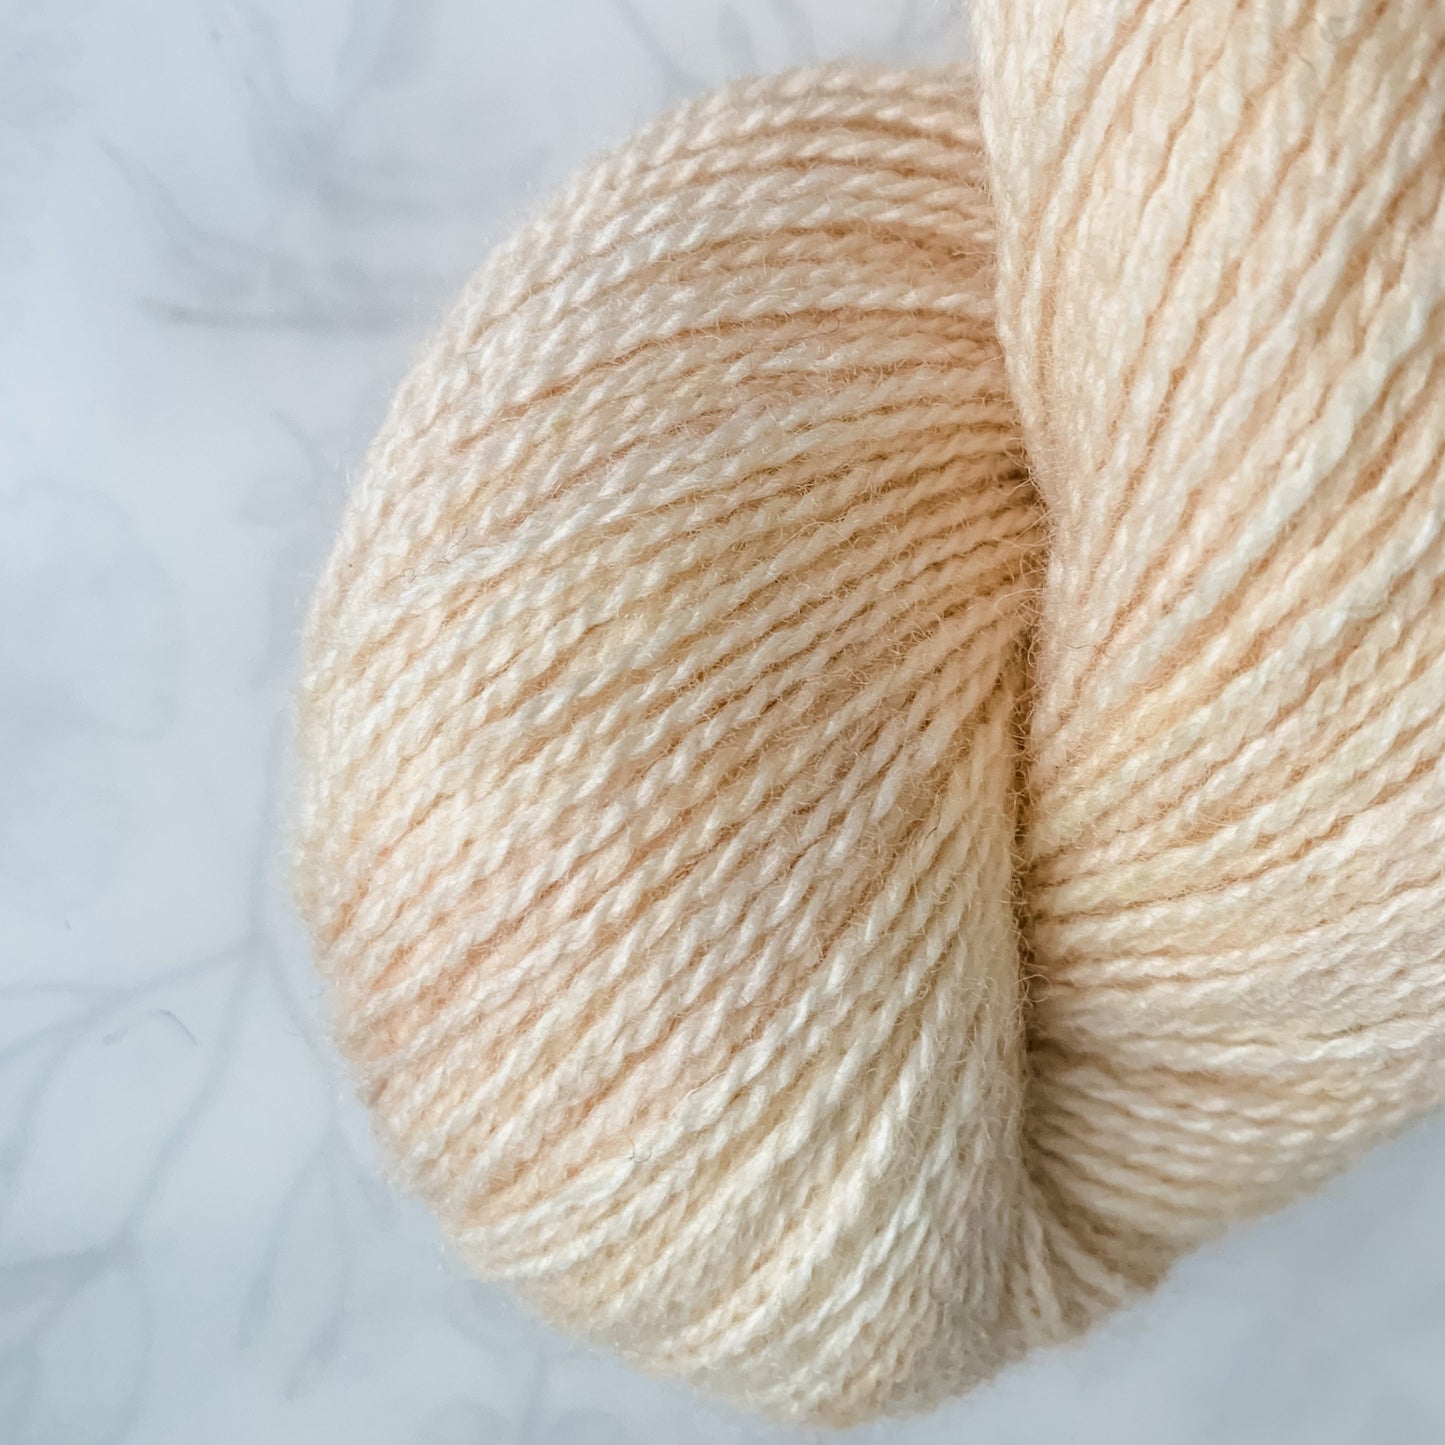 Nectar - Trollfjord sock - Hand Dyed Yarn - Tonal Yarn